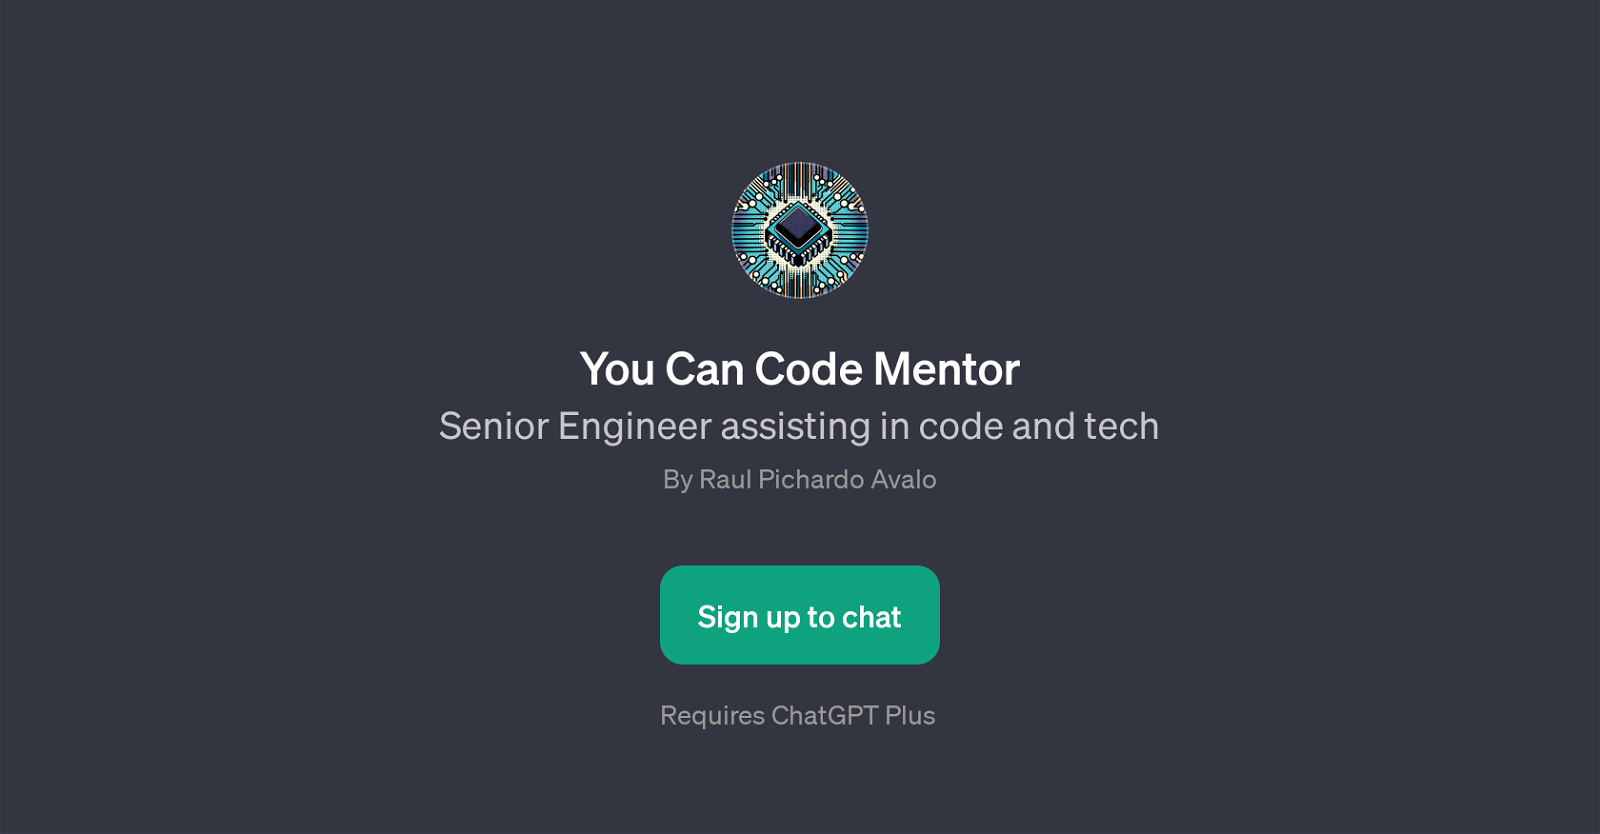 You Can Code Mentor website